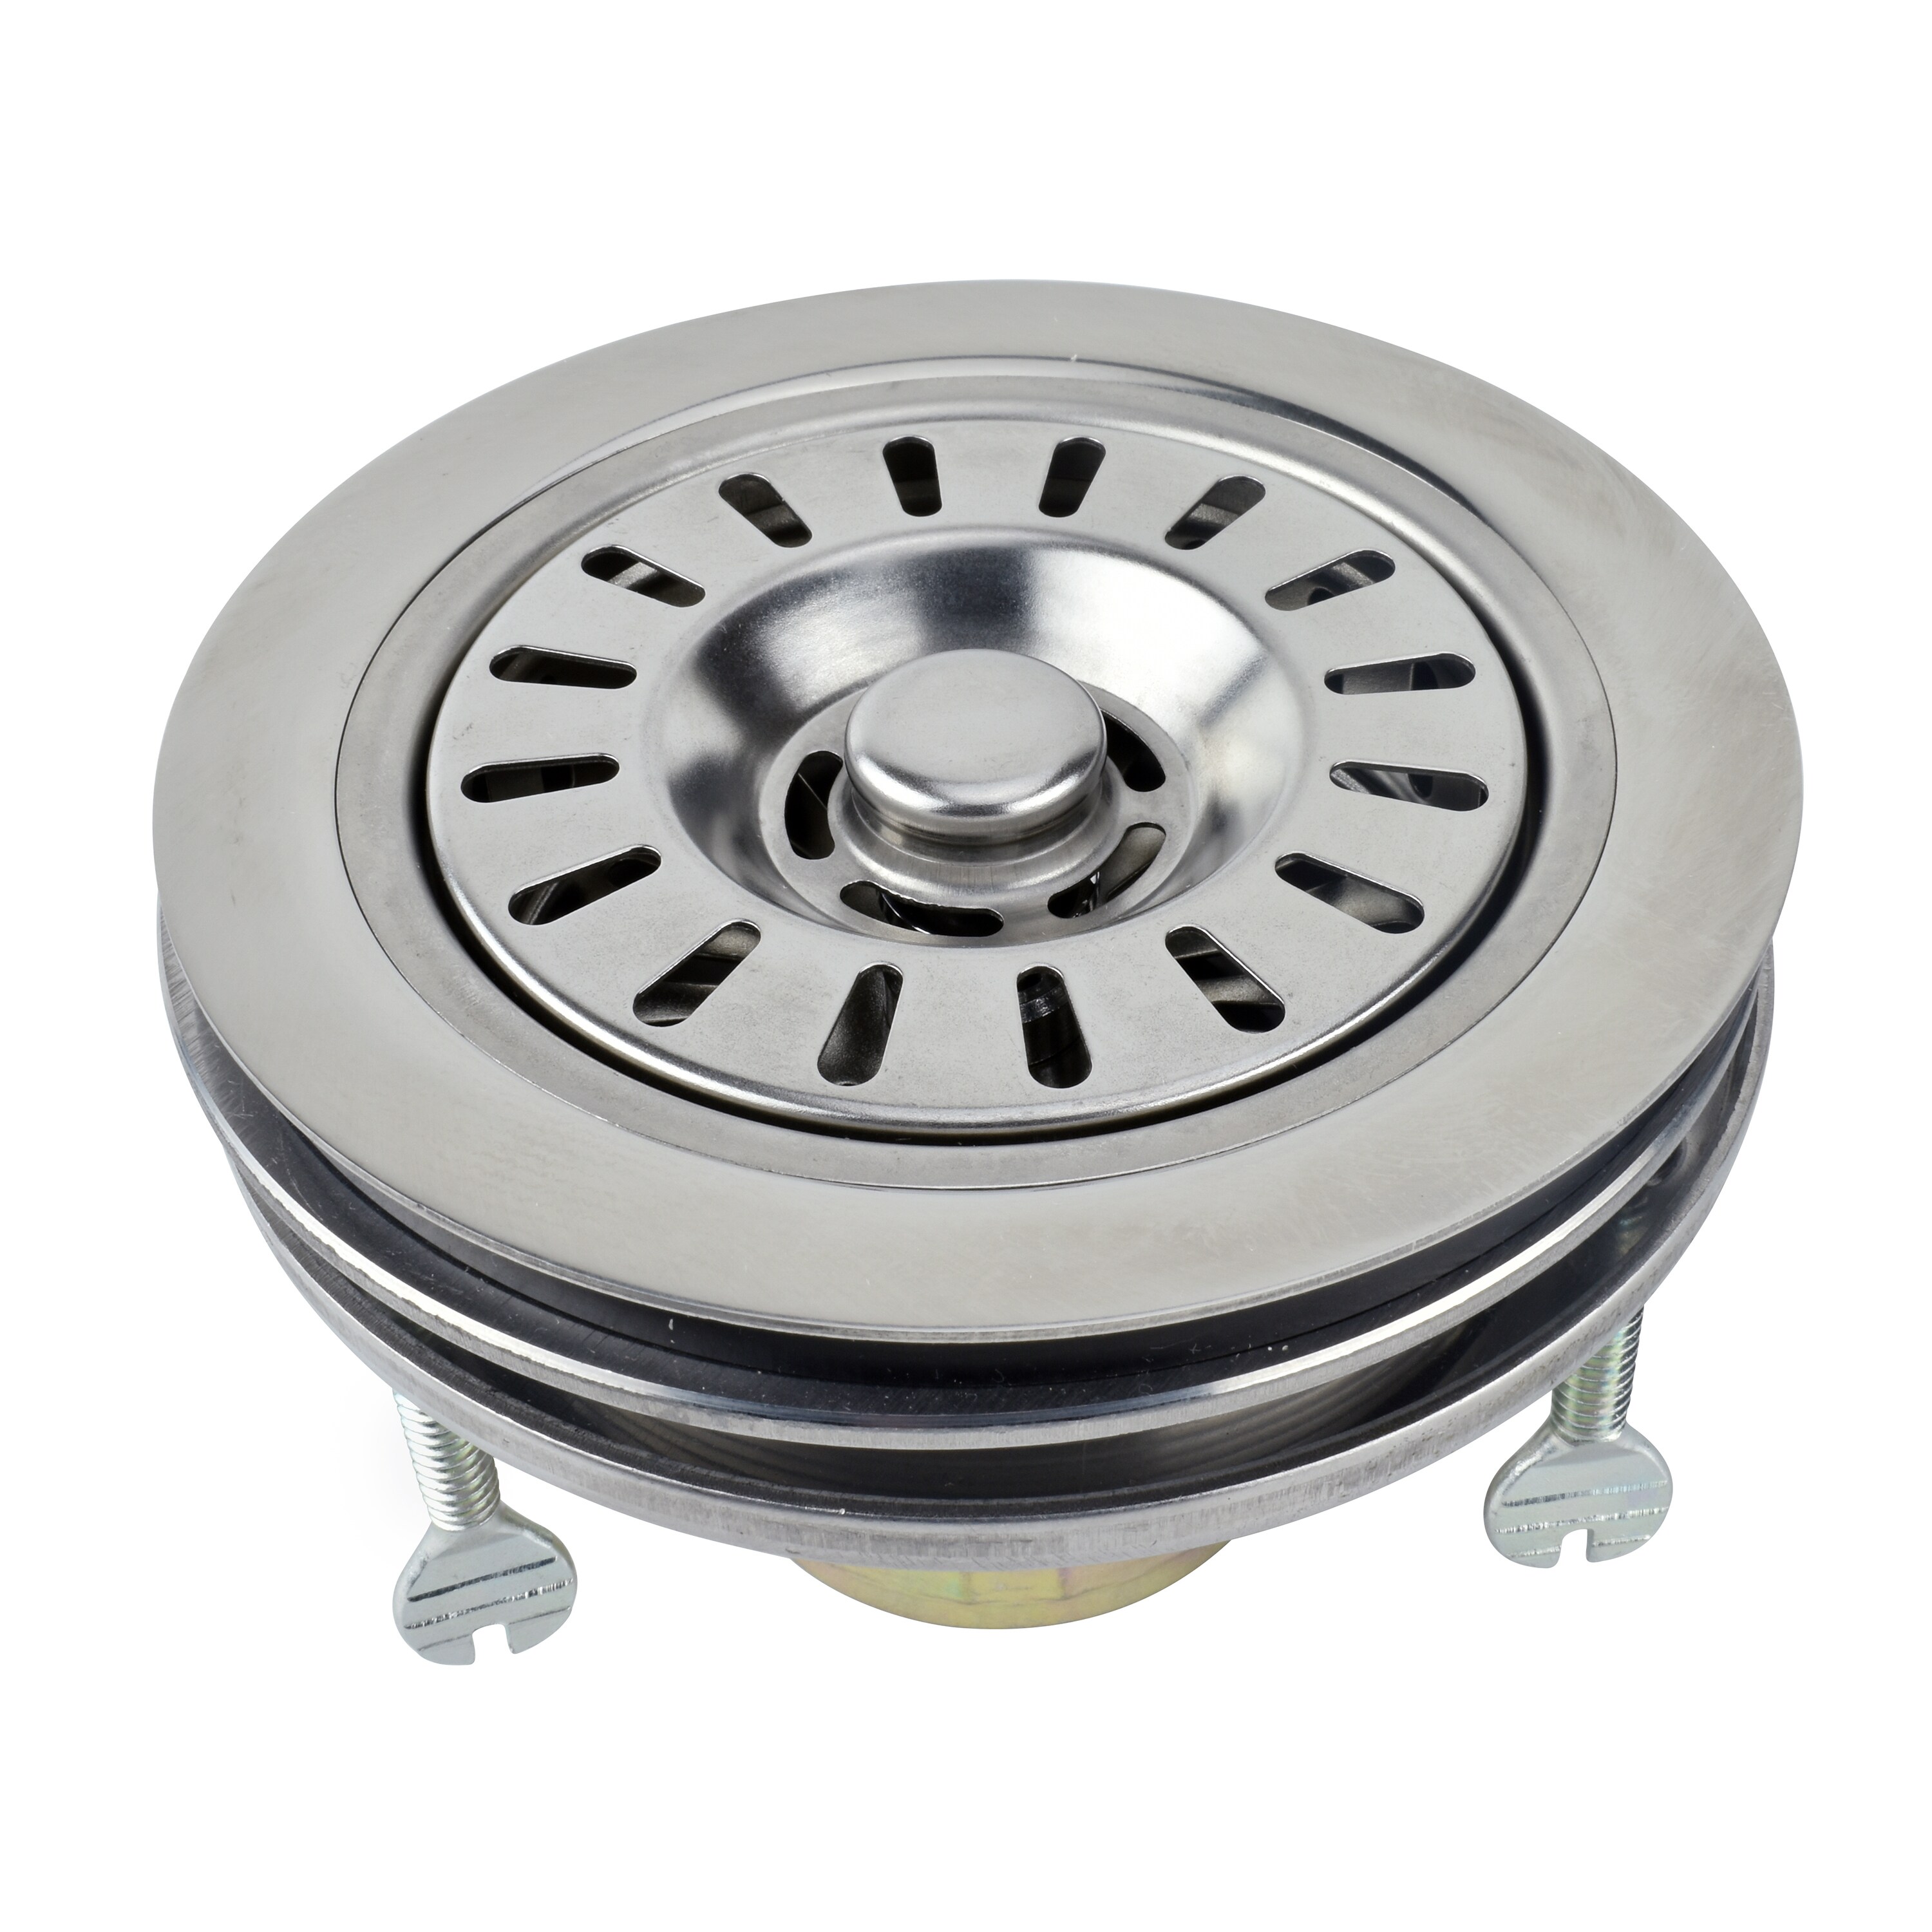 Seal for Stainless Steel Kitchen Sink Strainer Waste Plug Drain Stopper  Basket